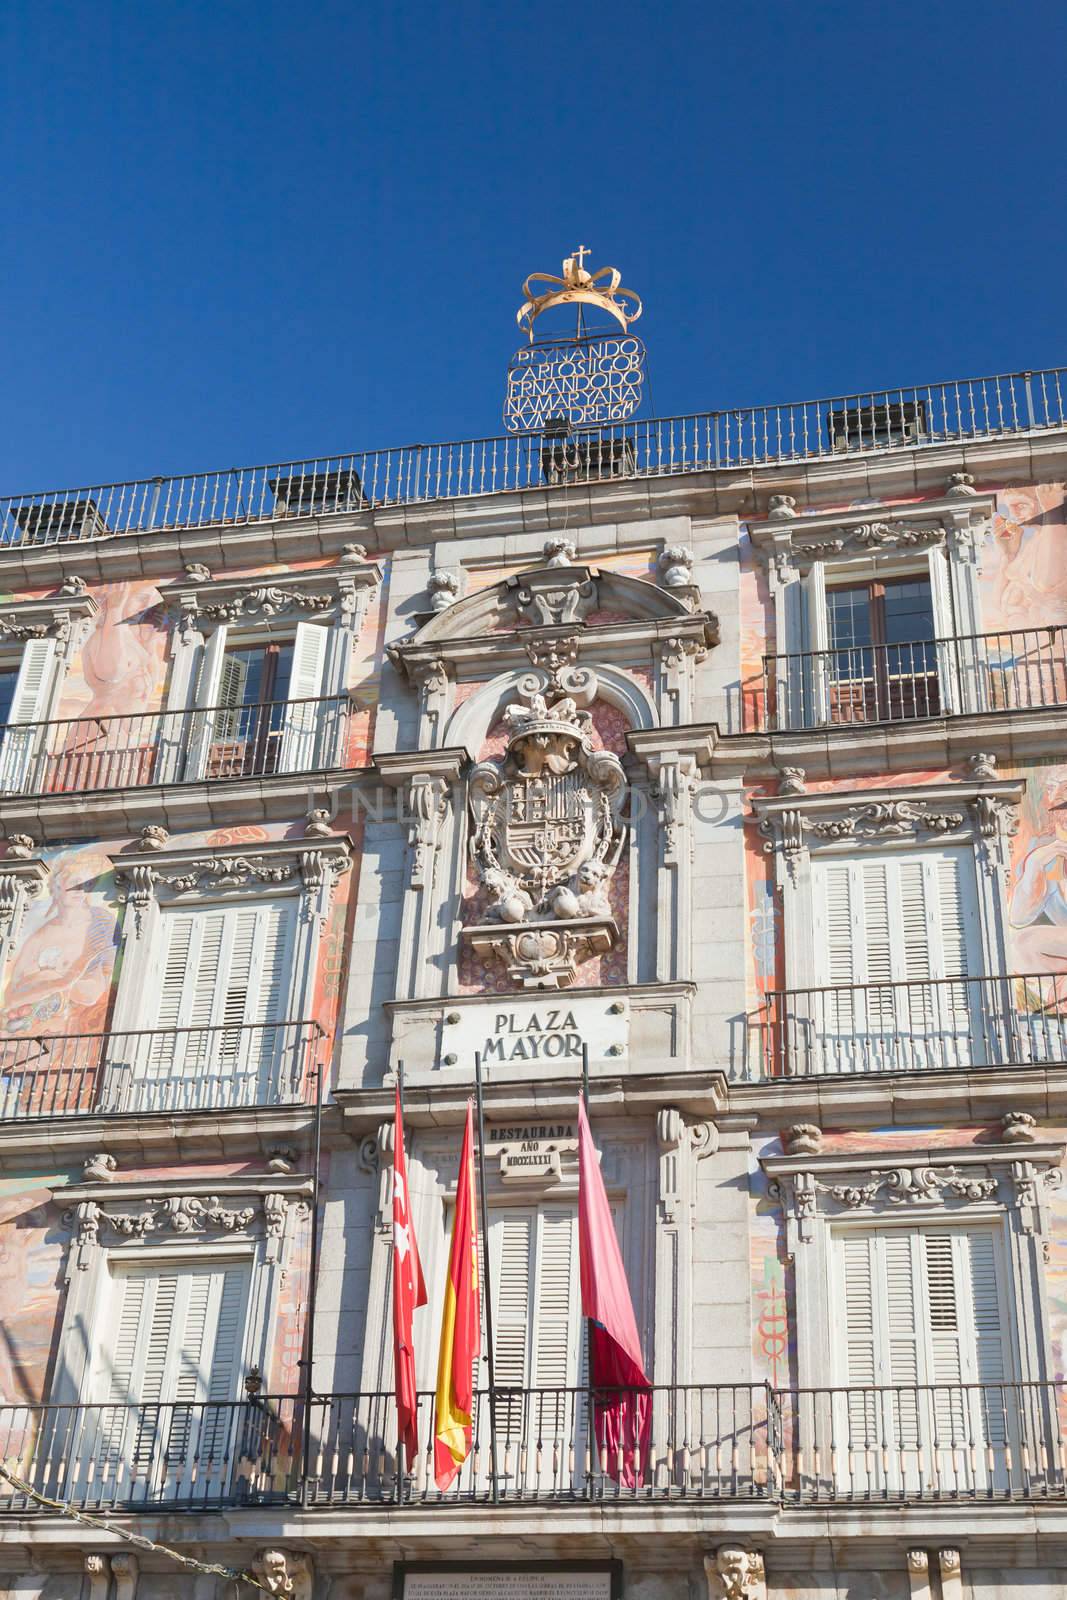 The Plaza Mayor (Main Square) in Madrid, Spain